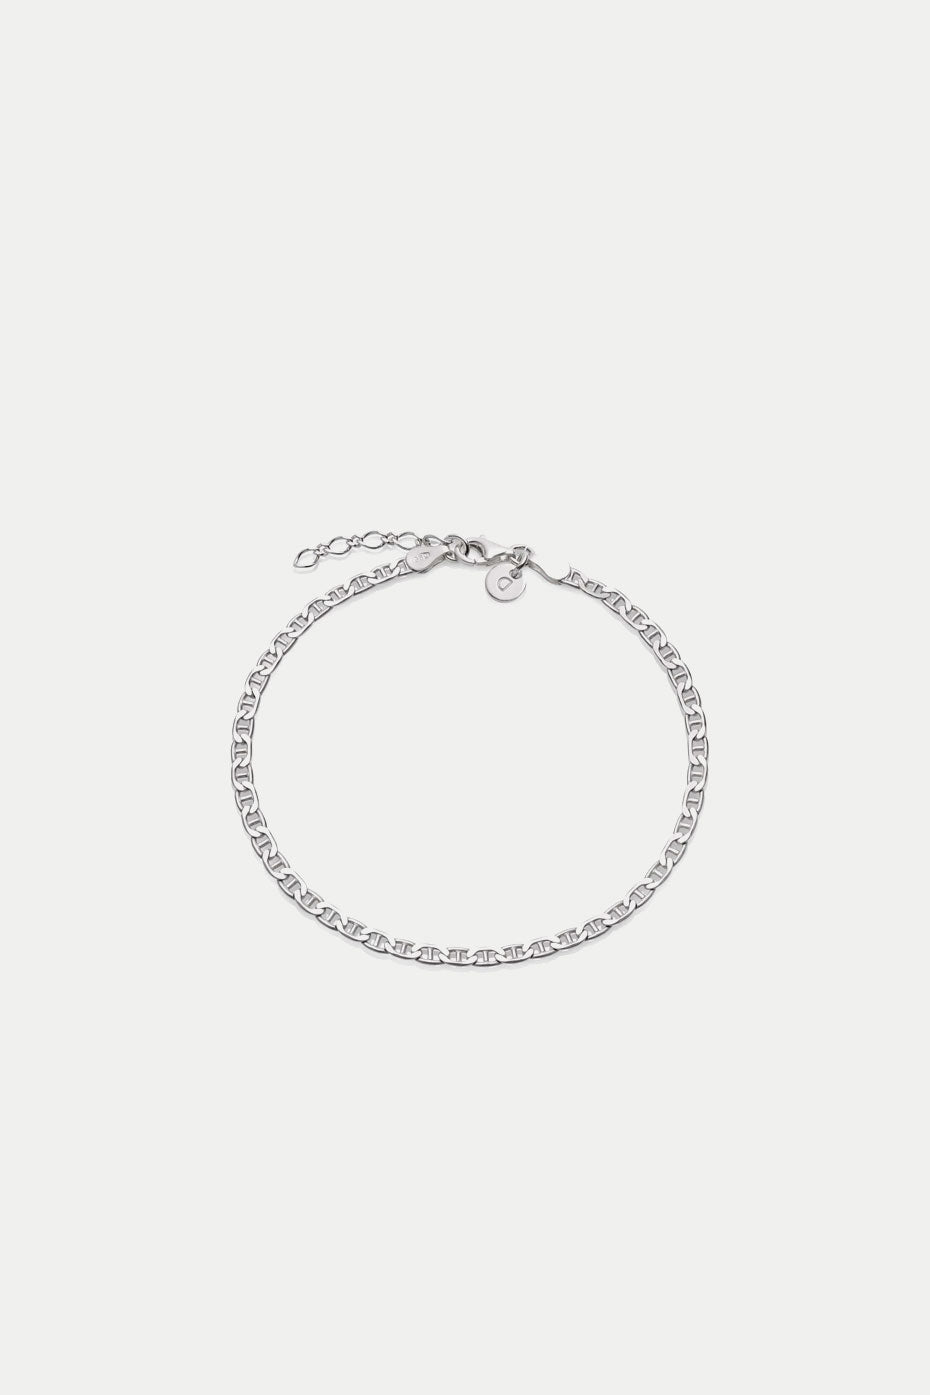 Daisy London Silver Infinity Chain Barcelet